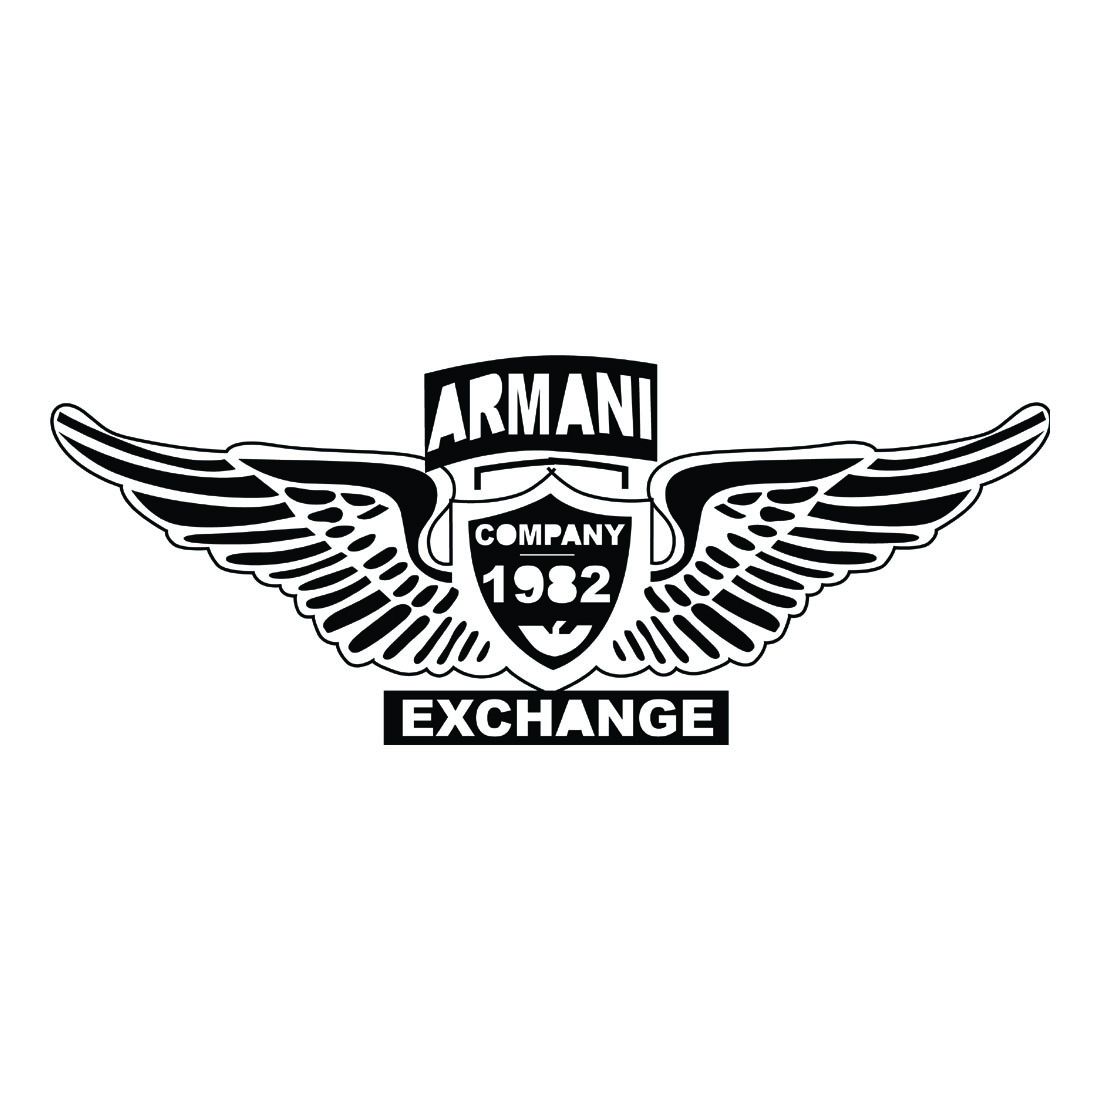 Armani 1982 T Shirt cover image.